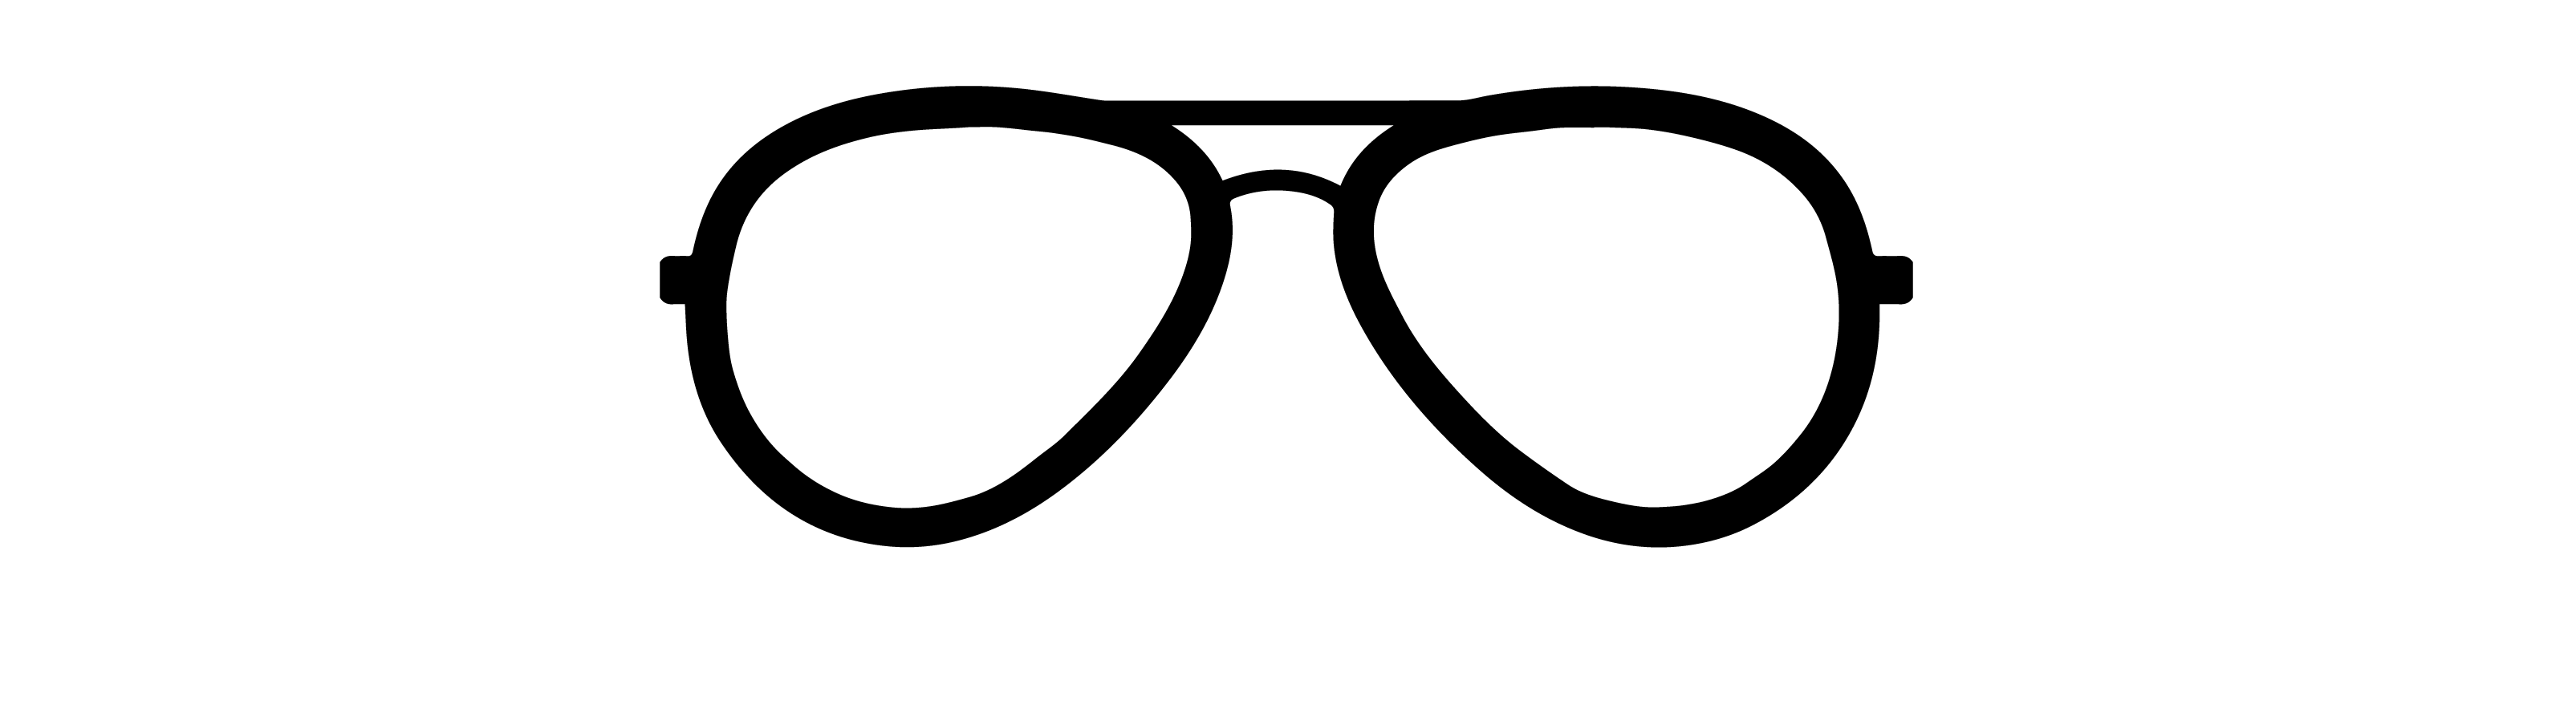 Sunglasses clipart aviator, Sunglasses aviator Transparent